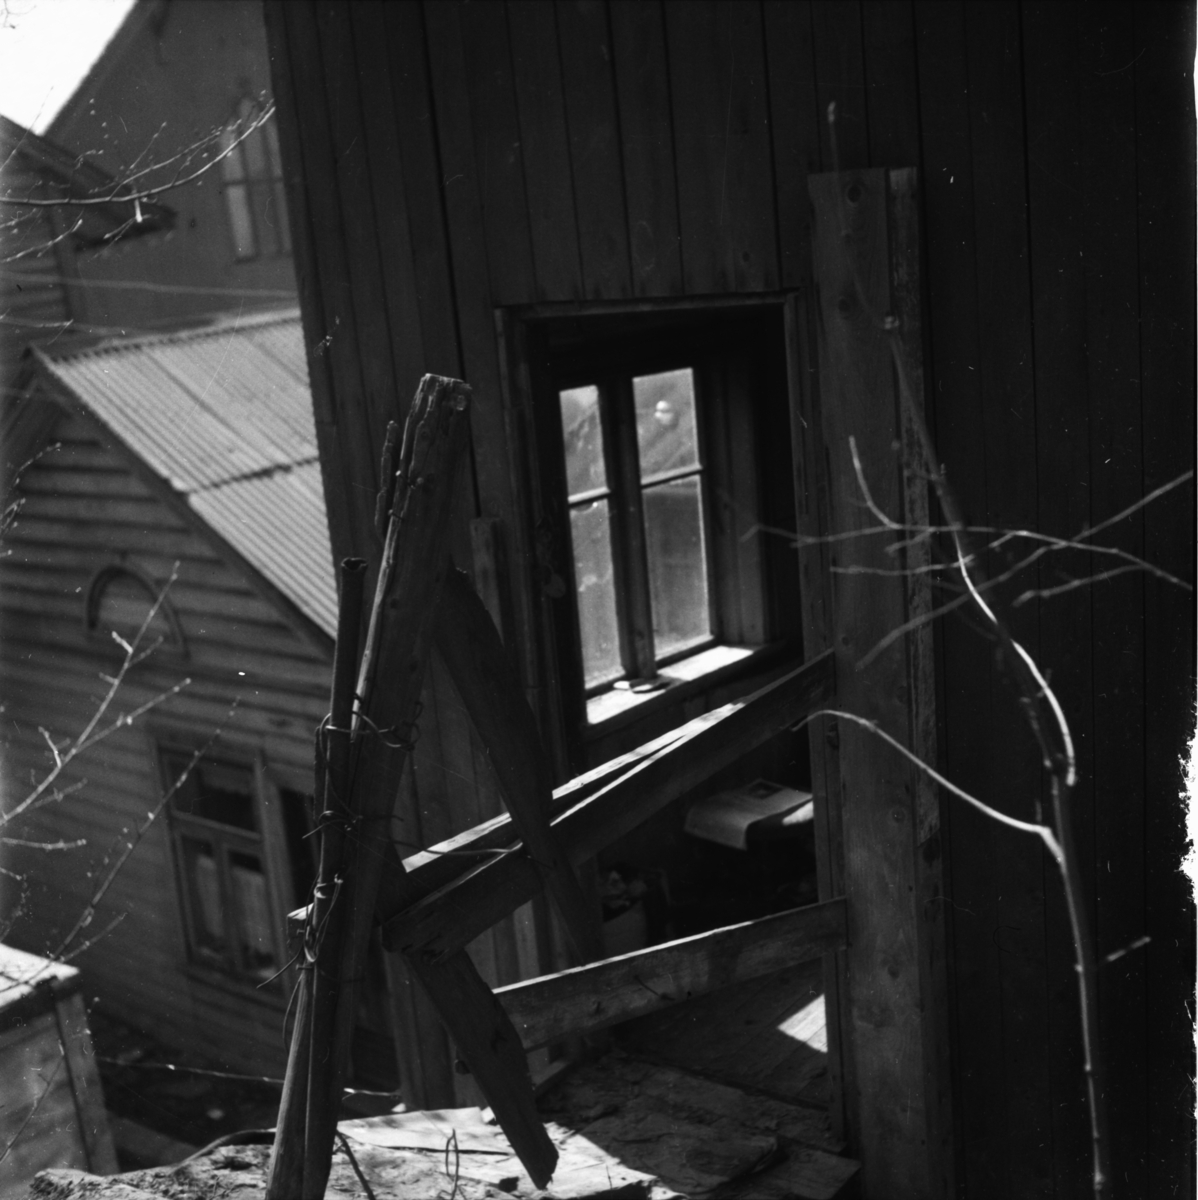 Vardens arkiv. "Elendige boligforhold i Skien"  28.04.1954